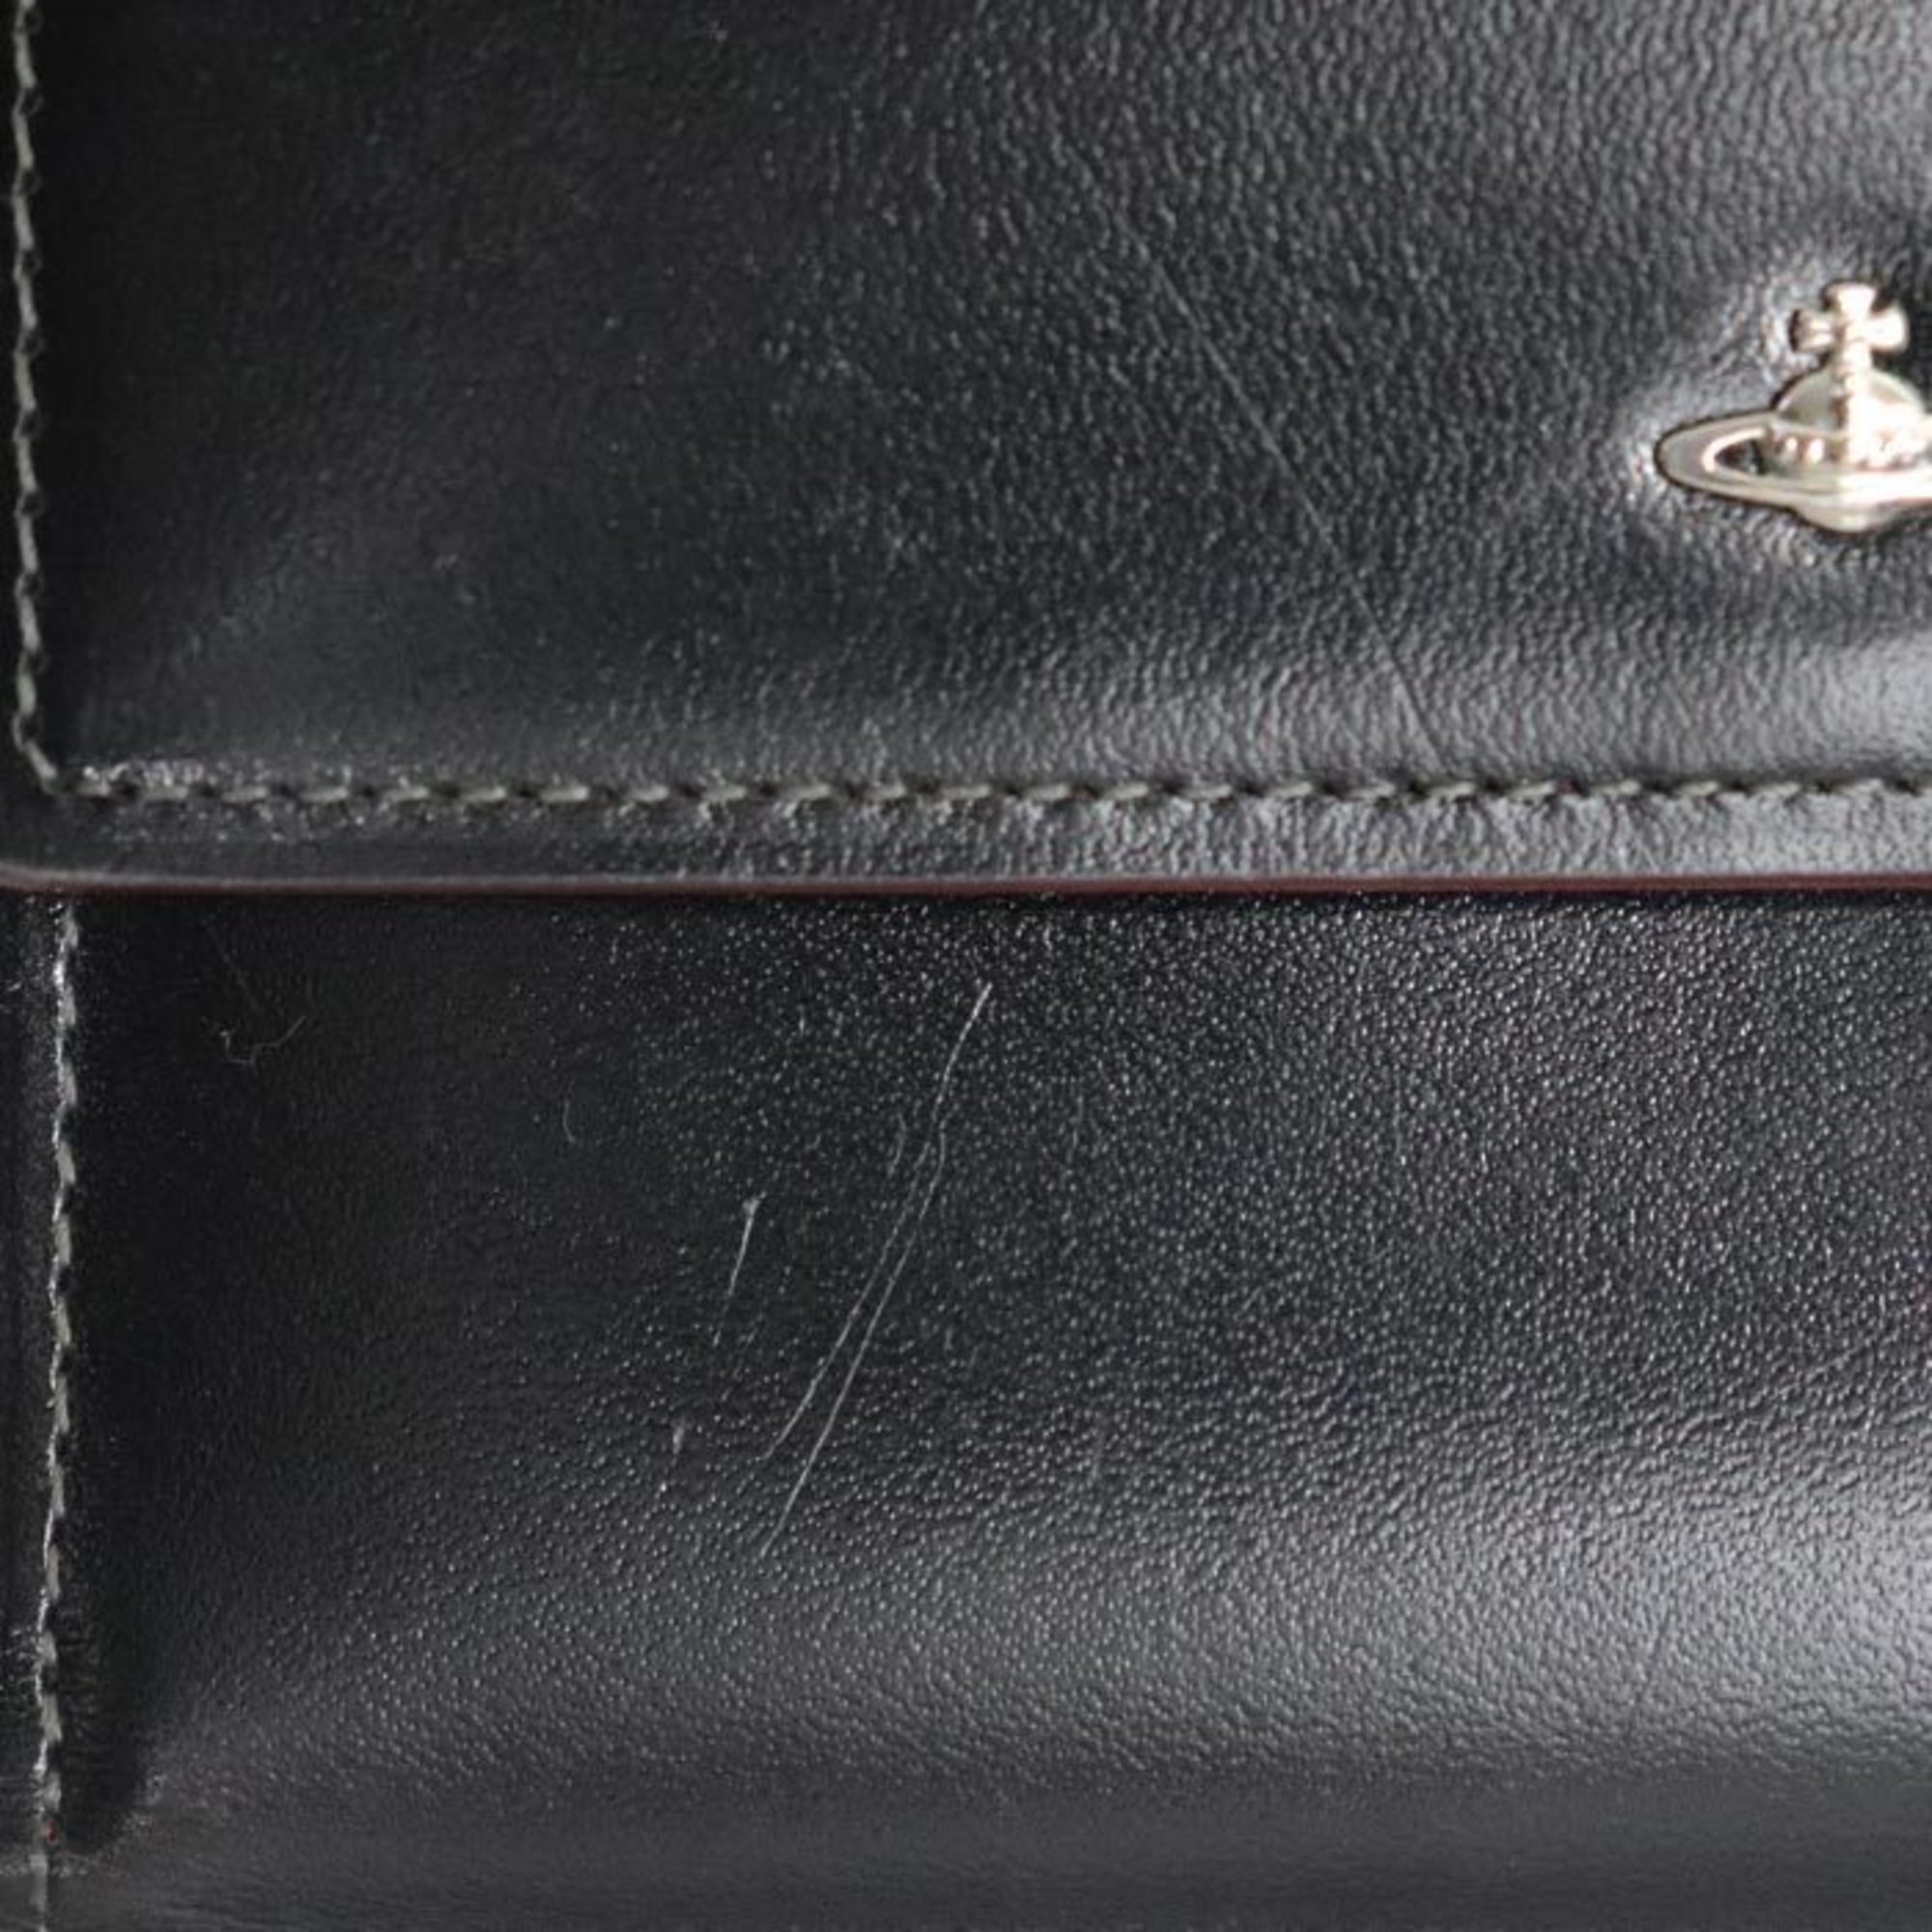 Vivienne Westwood SIMPLE TINY ORB Trifold Wallet Black 3318D7K Women's